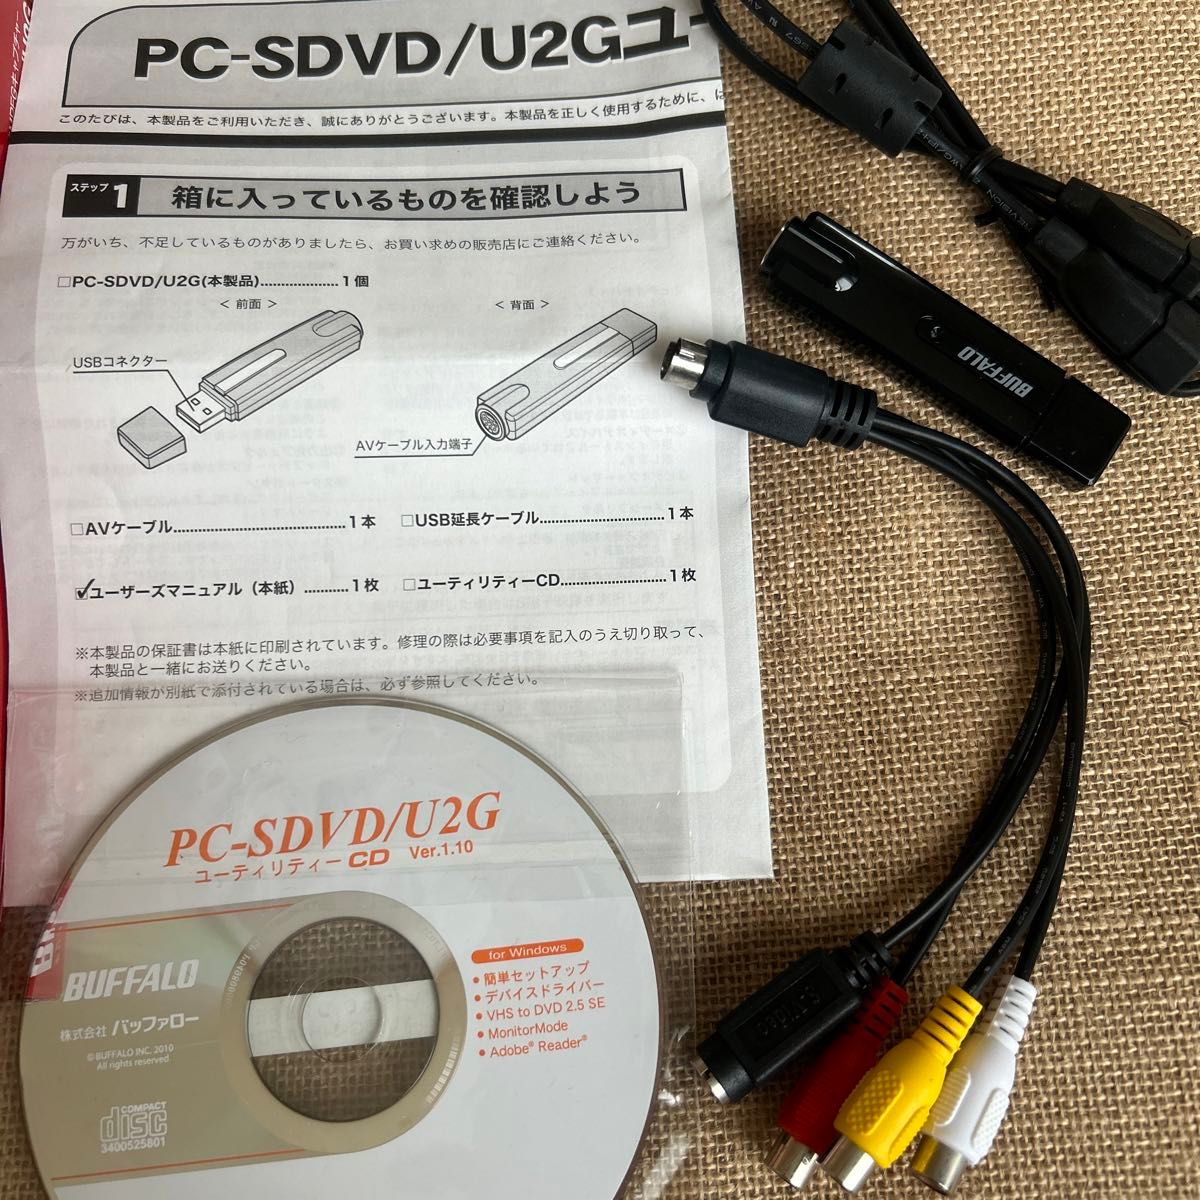 BUFFALO モニターモード搭載 USB用ビデオキャプチャー PC-SDVD/U2G